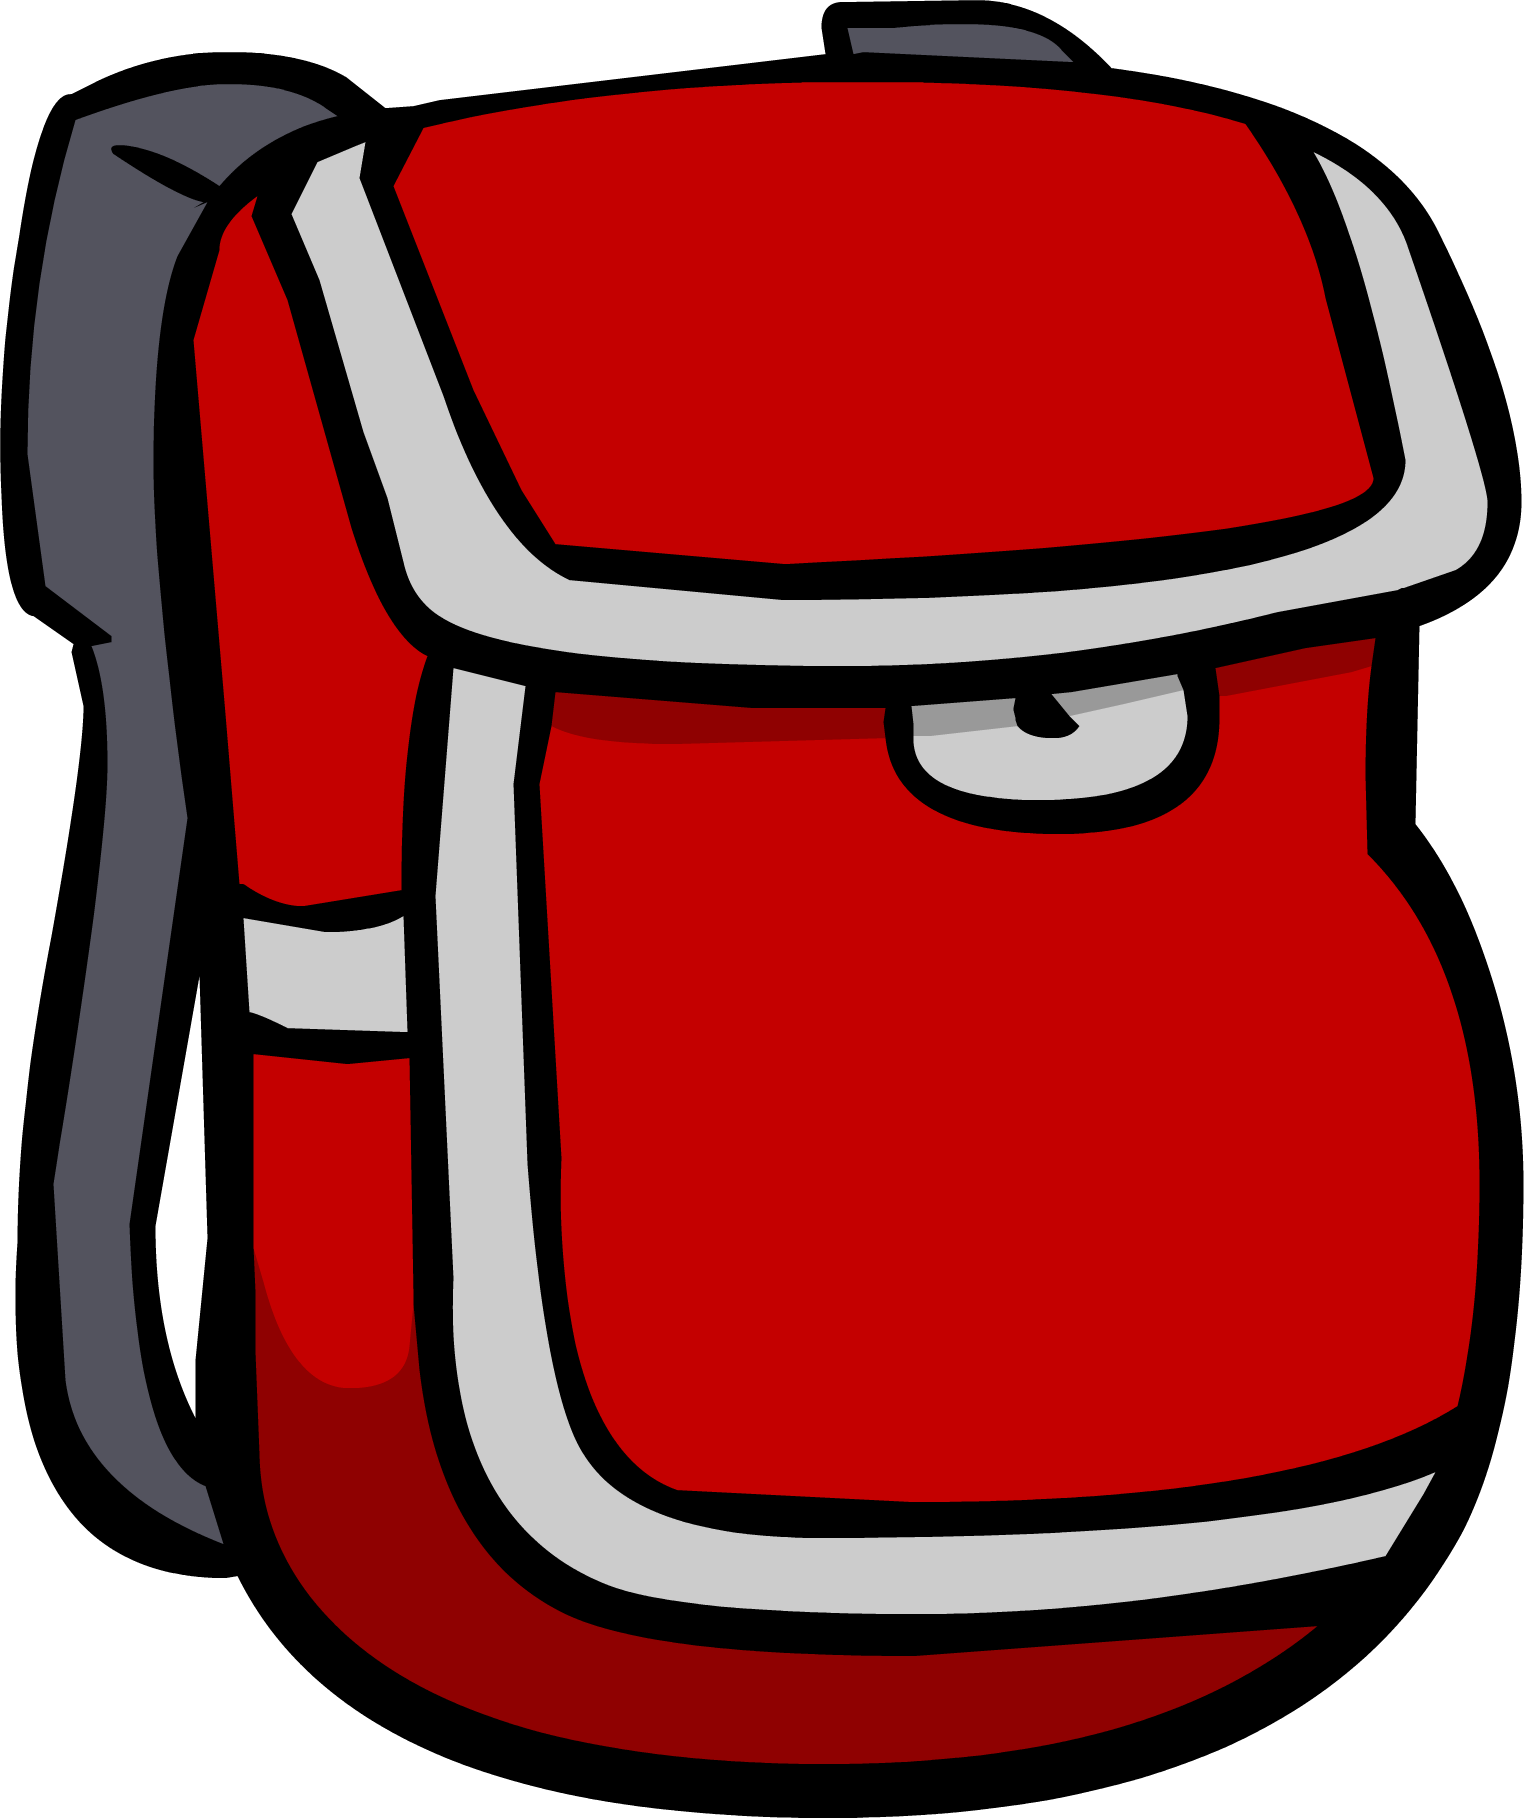 Backpack club penguin rewritten. Bookbag clipart red